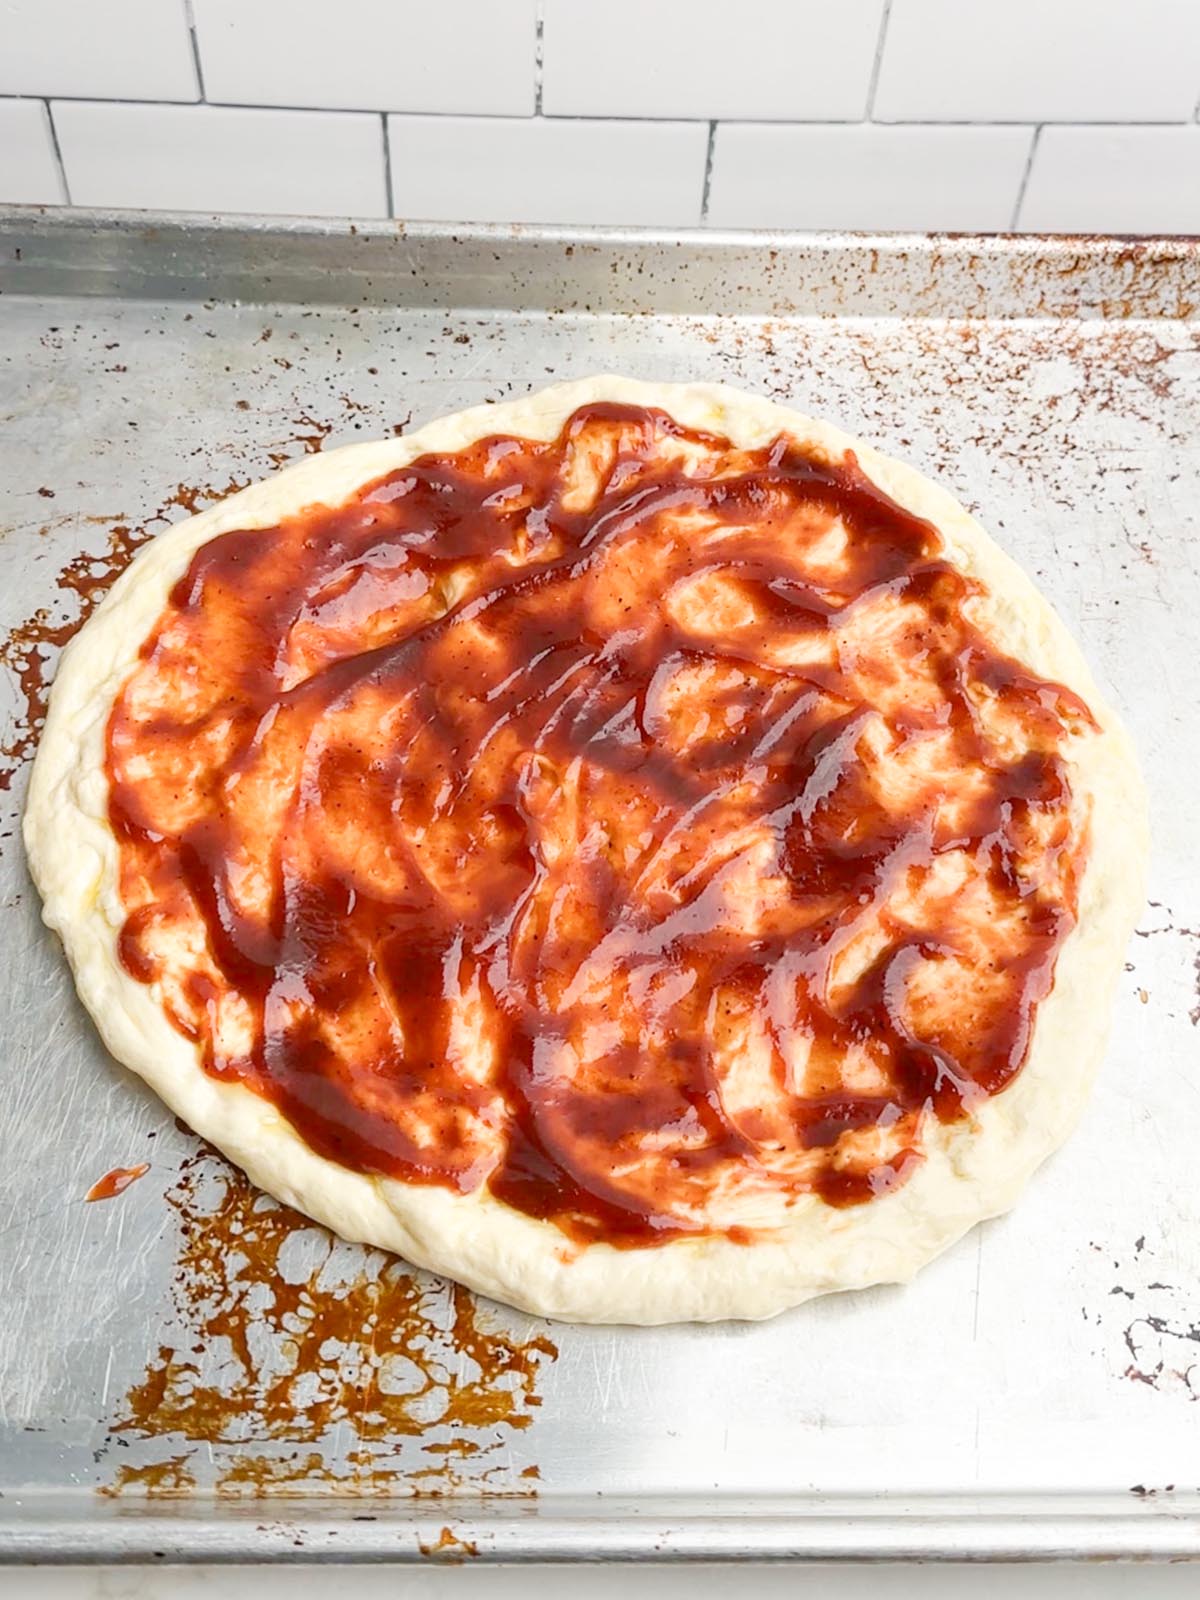 bbq sauce spread over pizza dough